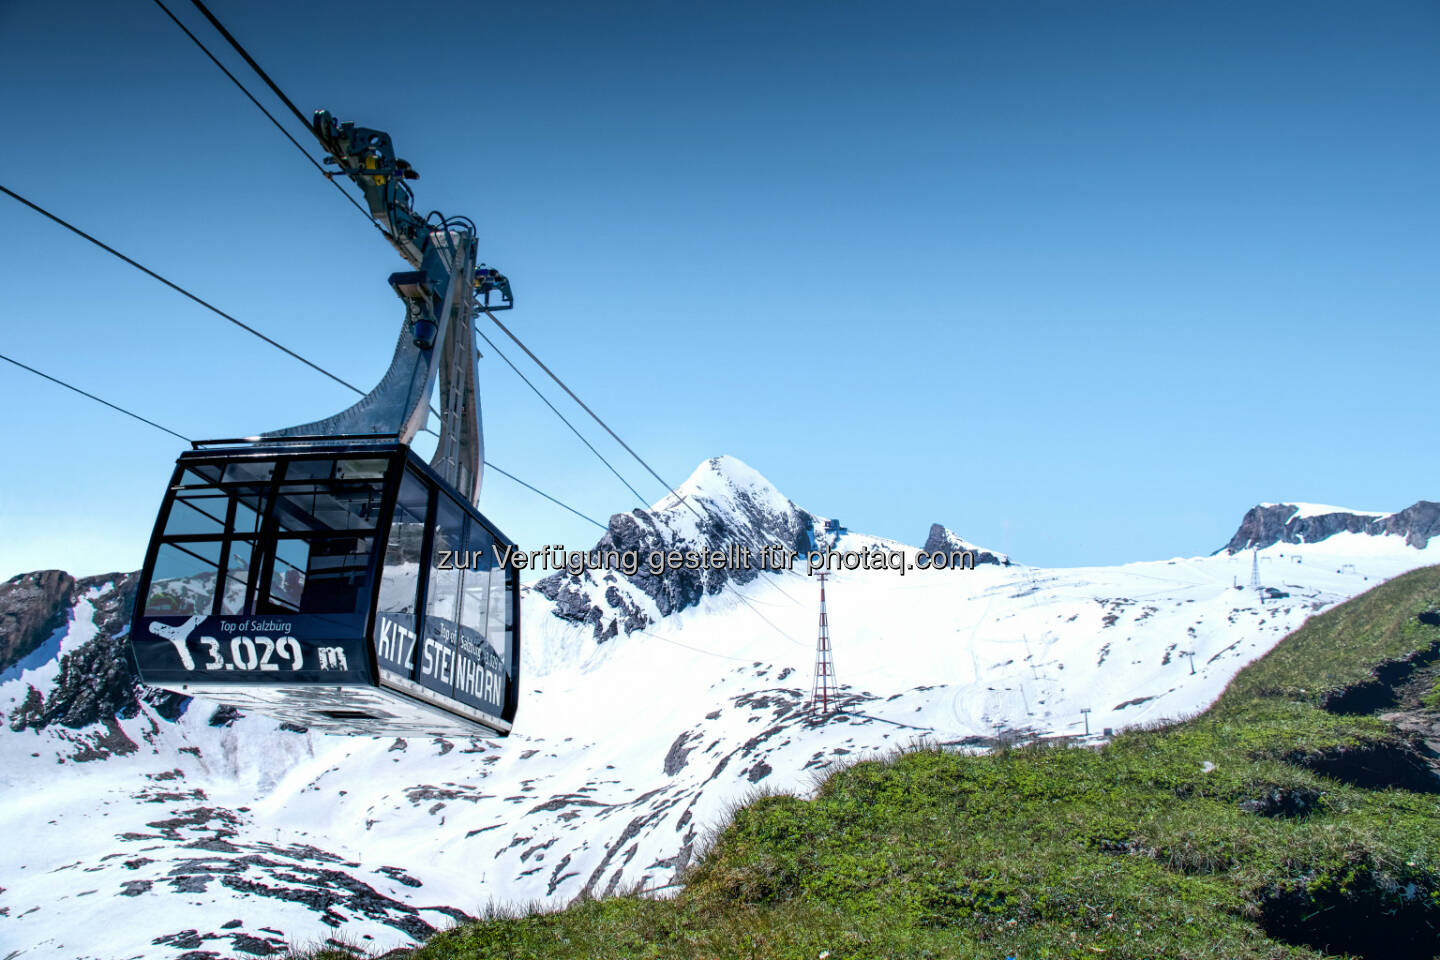 Kitzsteinhorn - Gletscherbahnen Kaprun AG übernimmt EuroNet Reisebüro GmbH, Gondel, Schnee, Skifahren, Berg, Fotocredit: Gletscherbahnen Kaprun AG